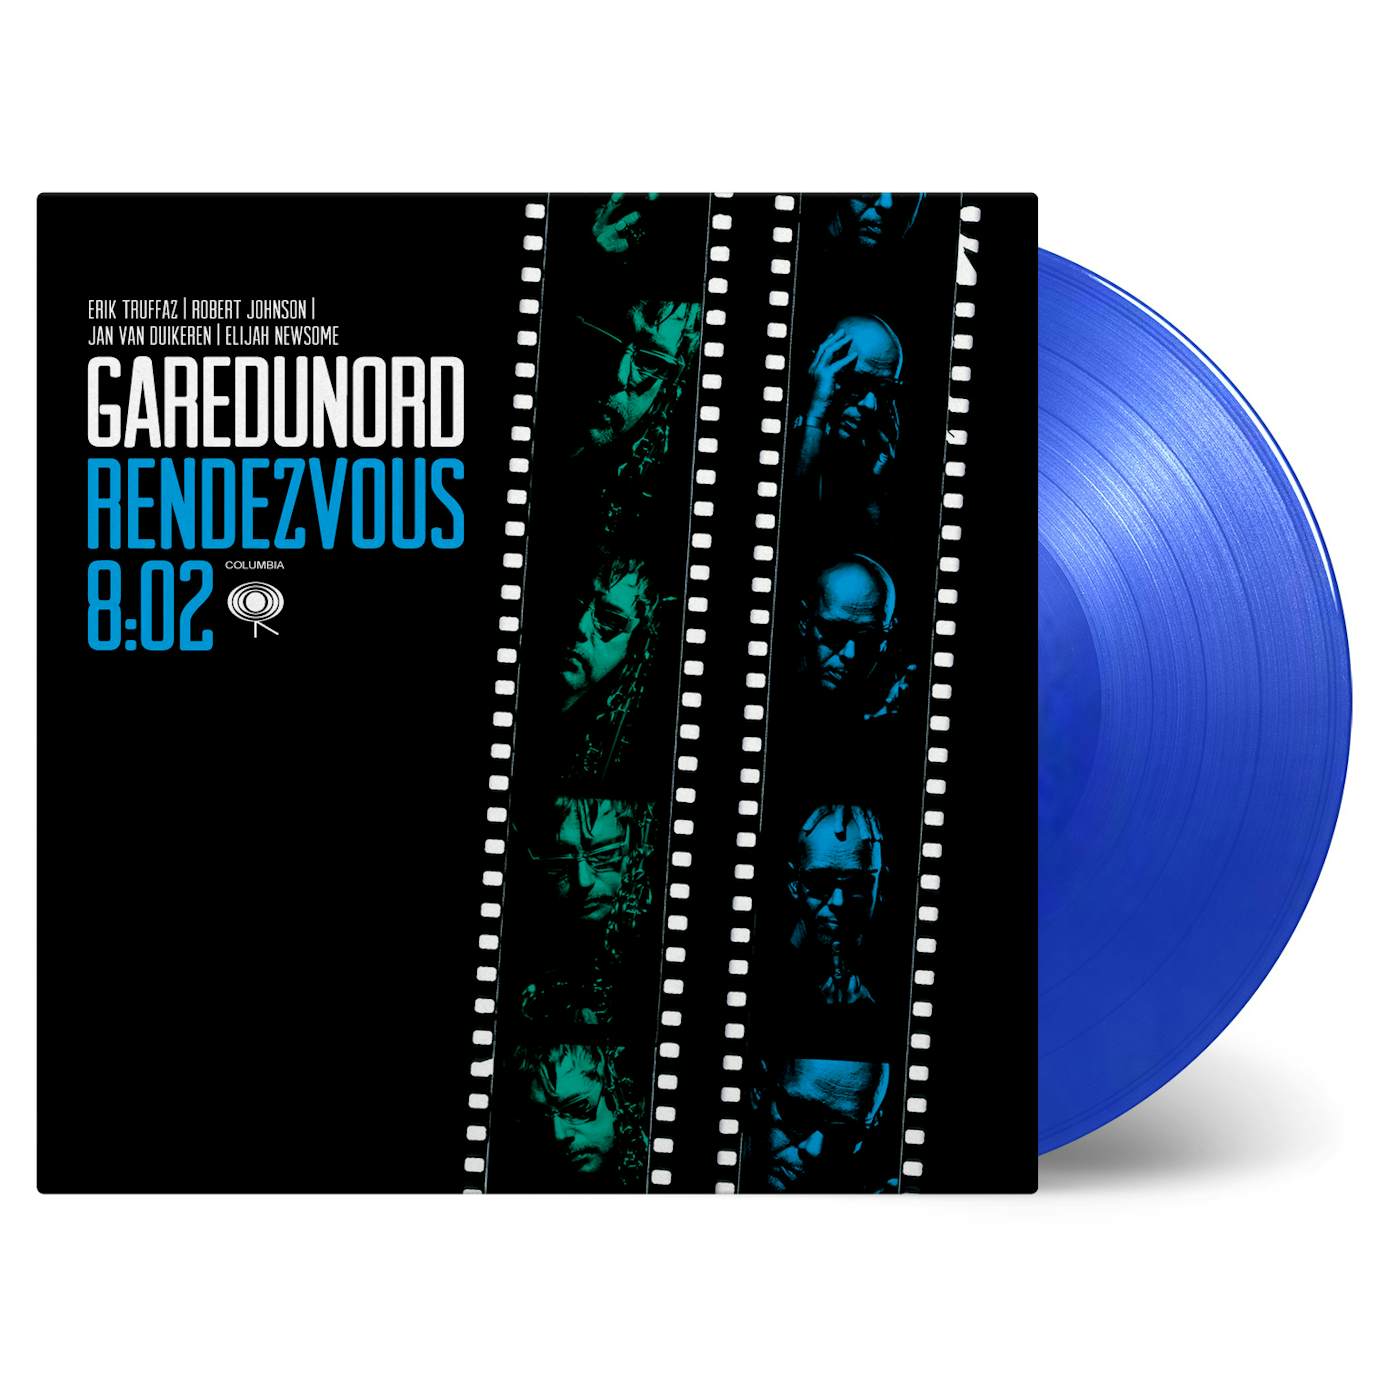 Gare Du Nord Rendezvous 8:02 Vinyl Record